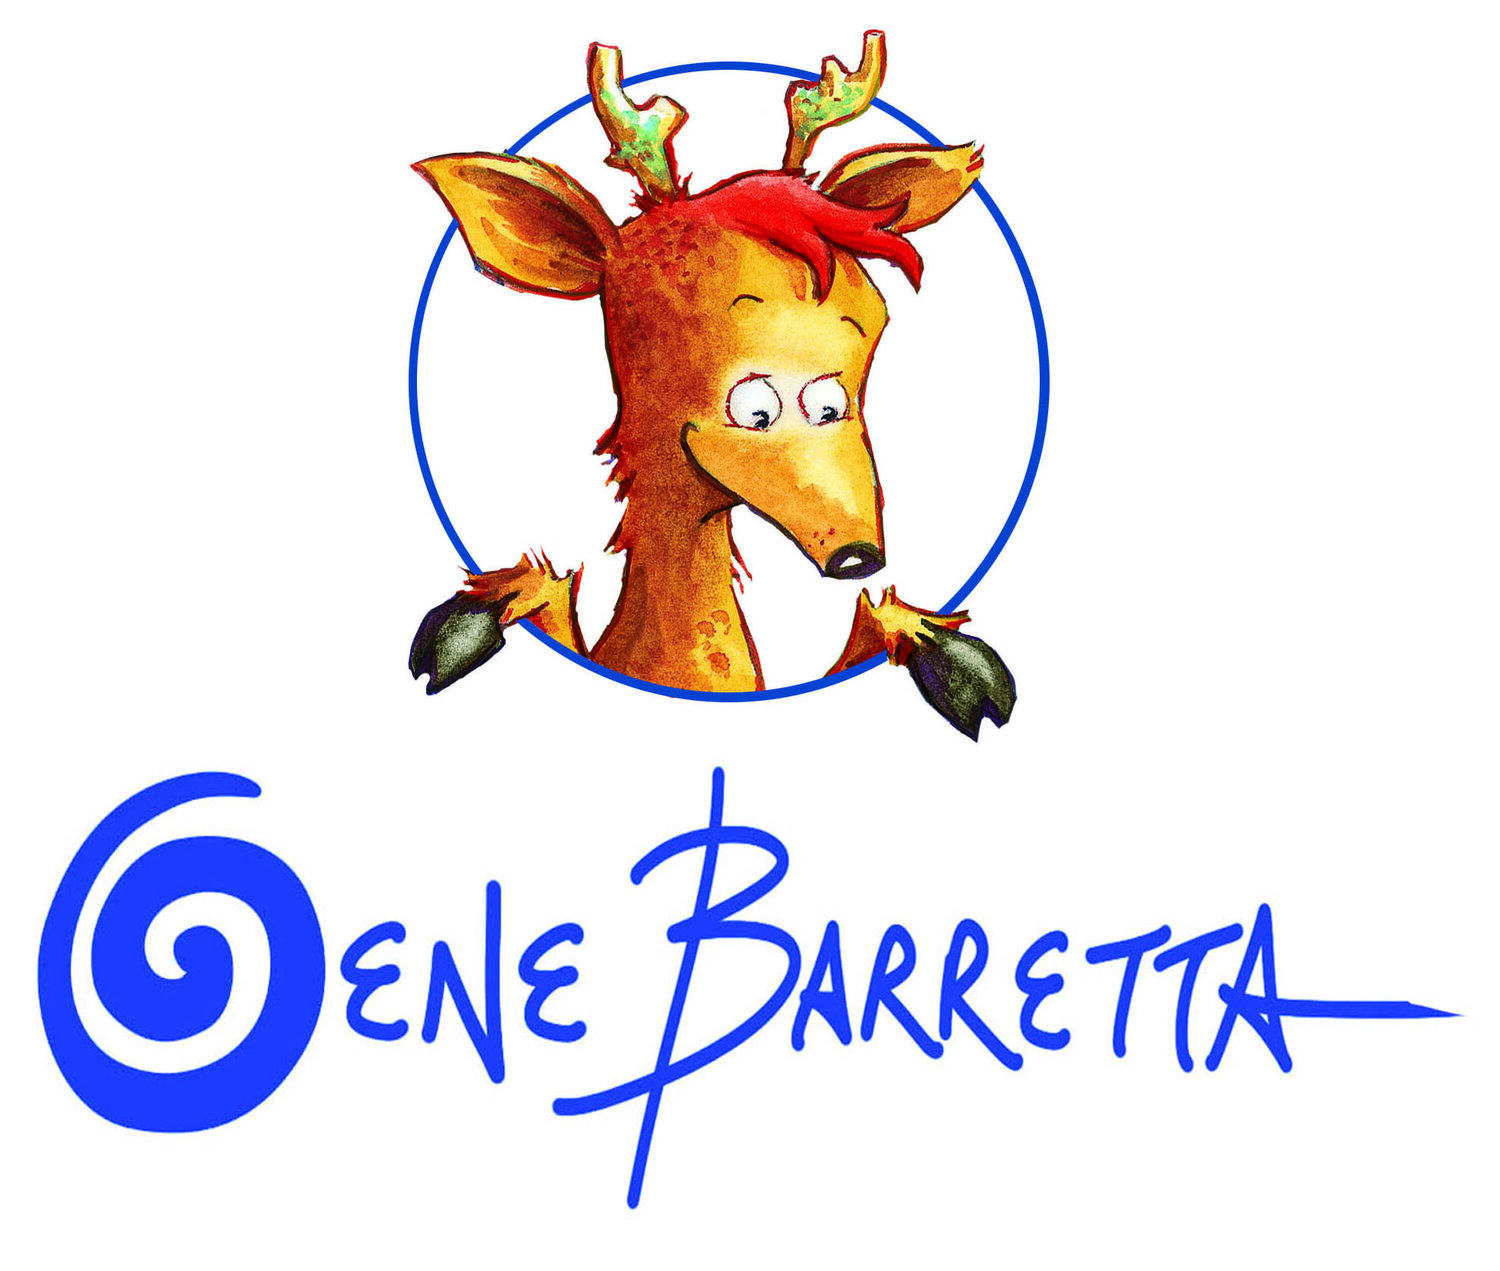 Gene Barretta